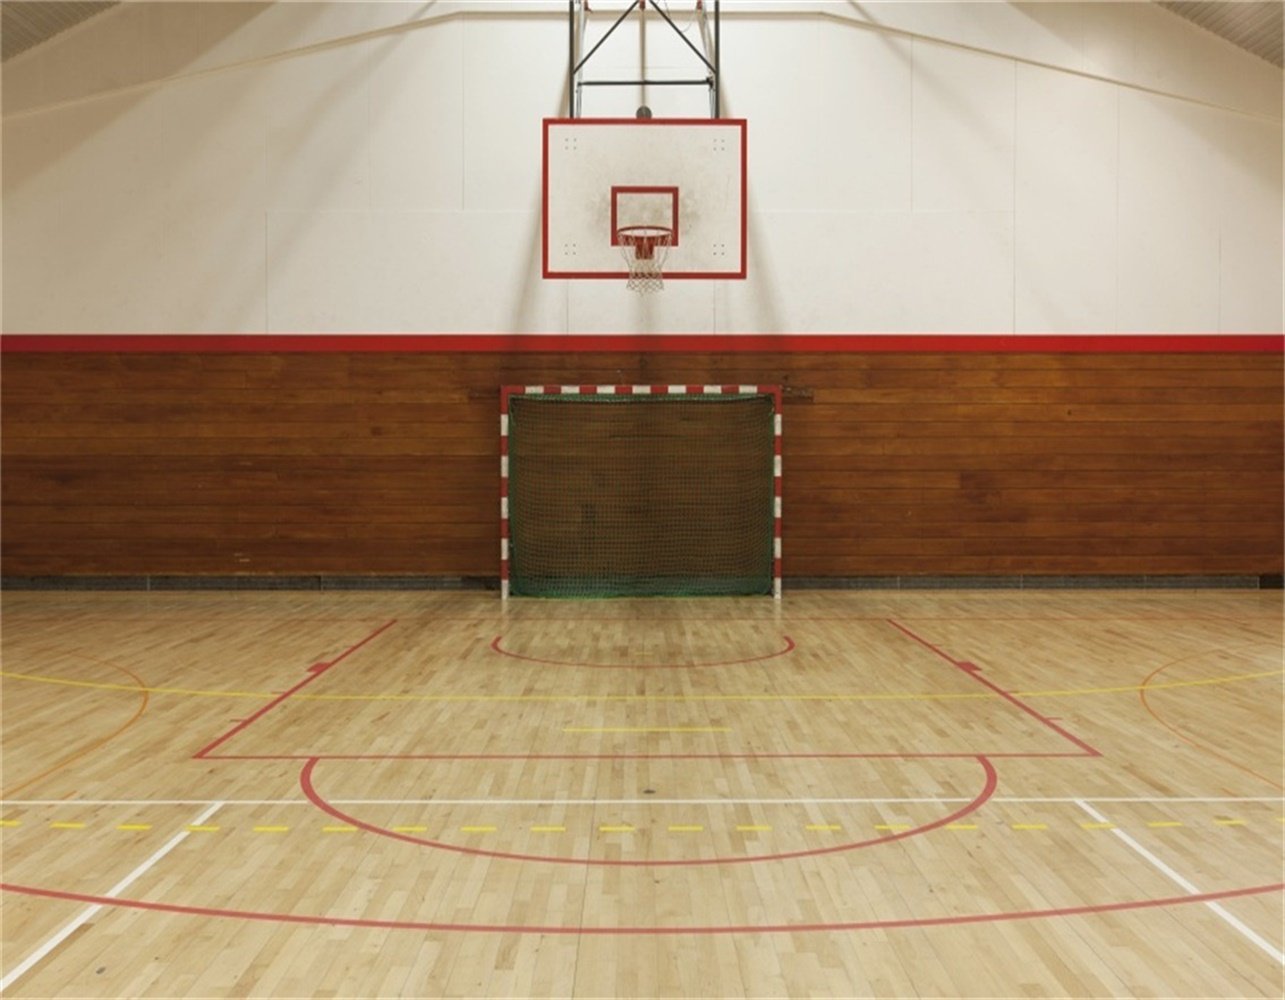 Basketball Gym Background